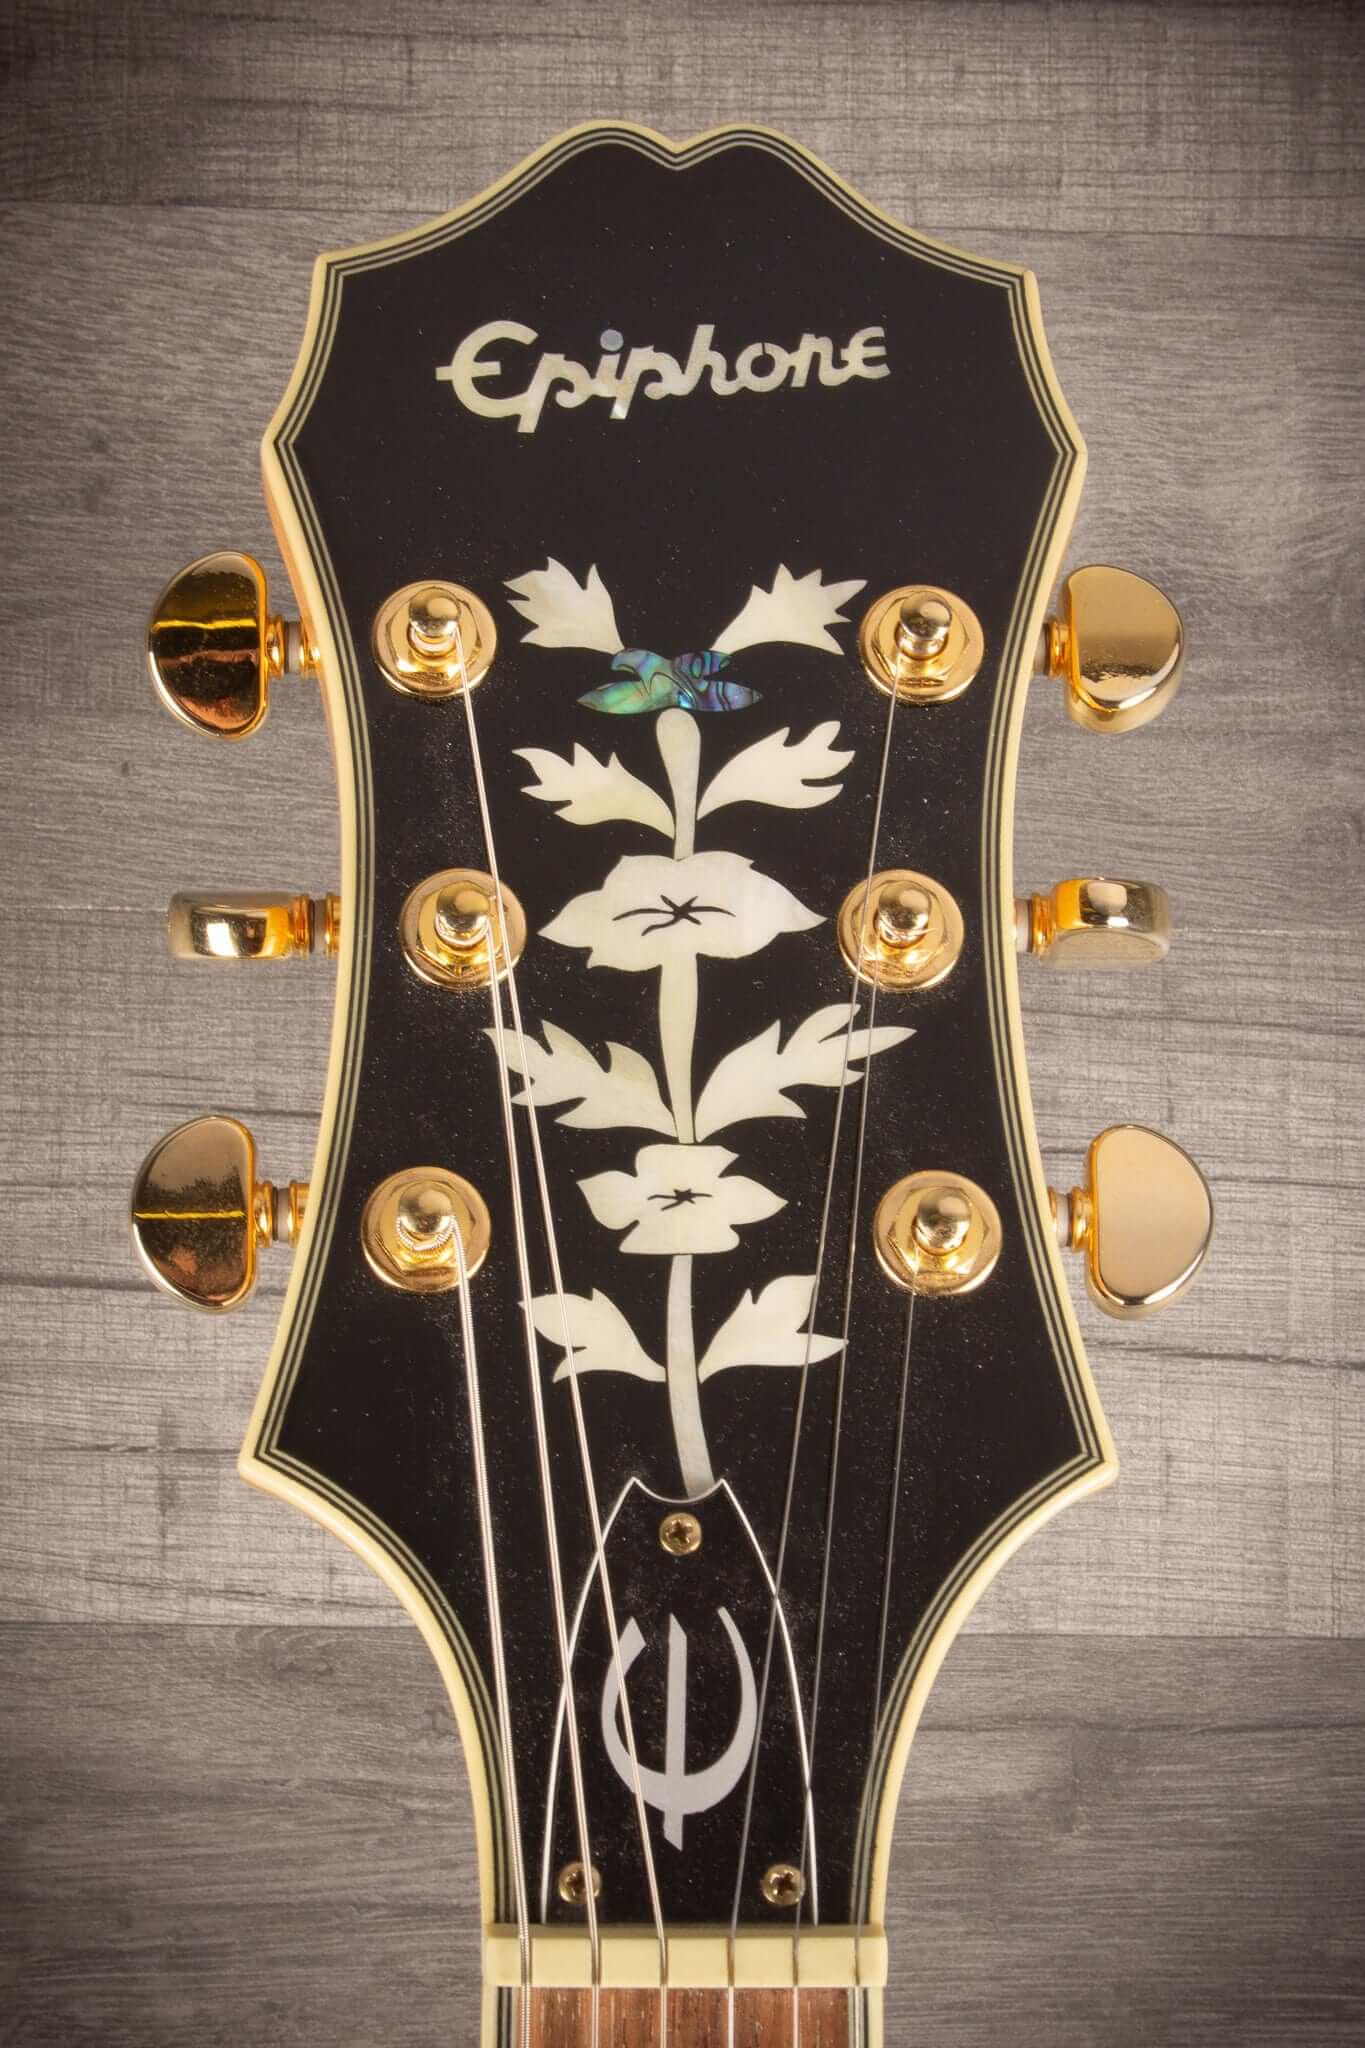 Epiphone Electric Guitar USED - Epiphone Sheraton ii - Natural, Gold Hardware - 2011